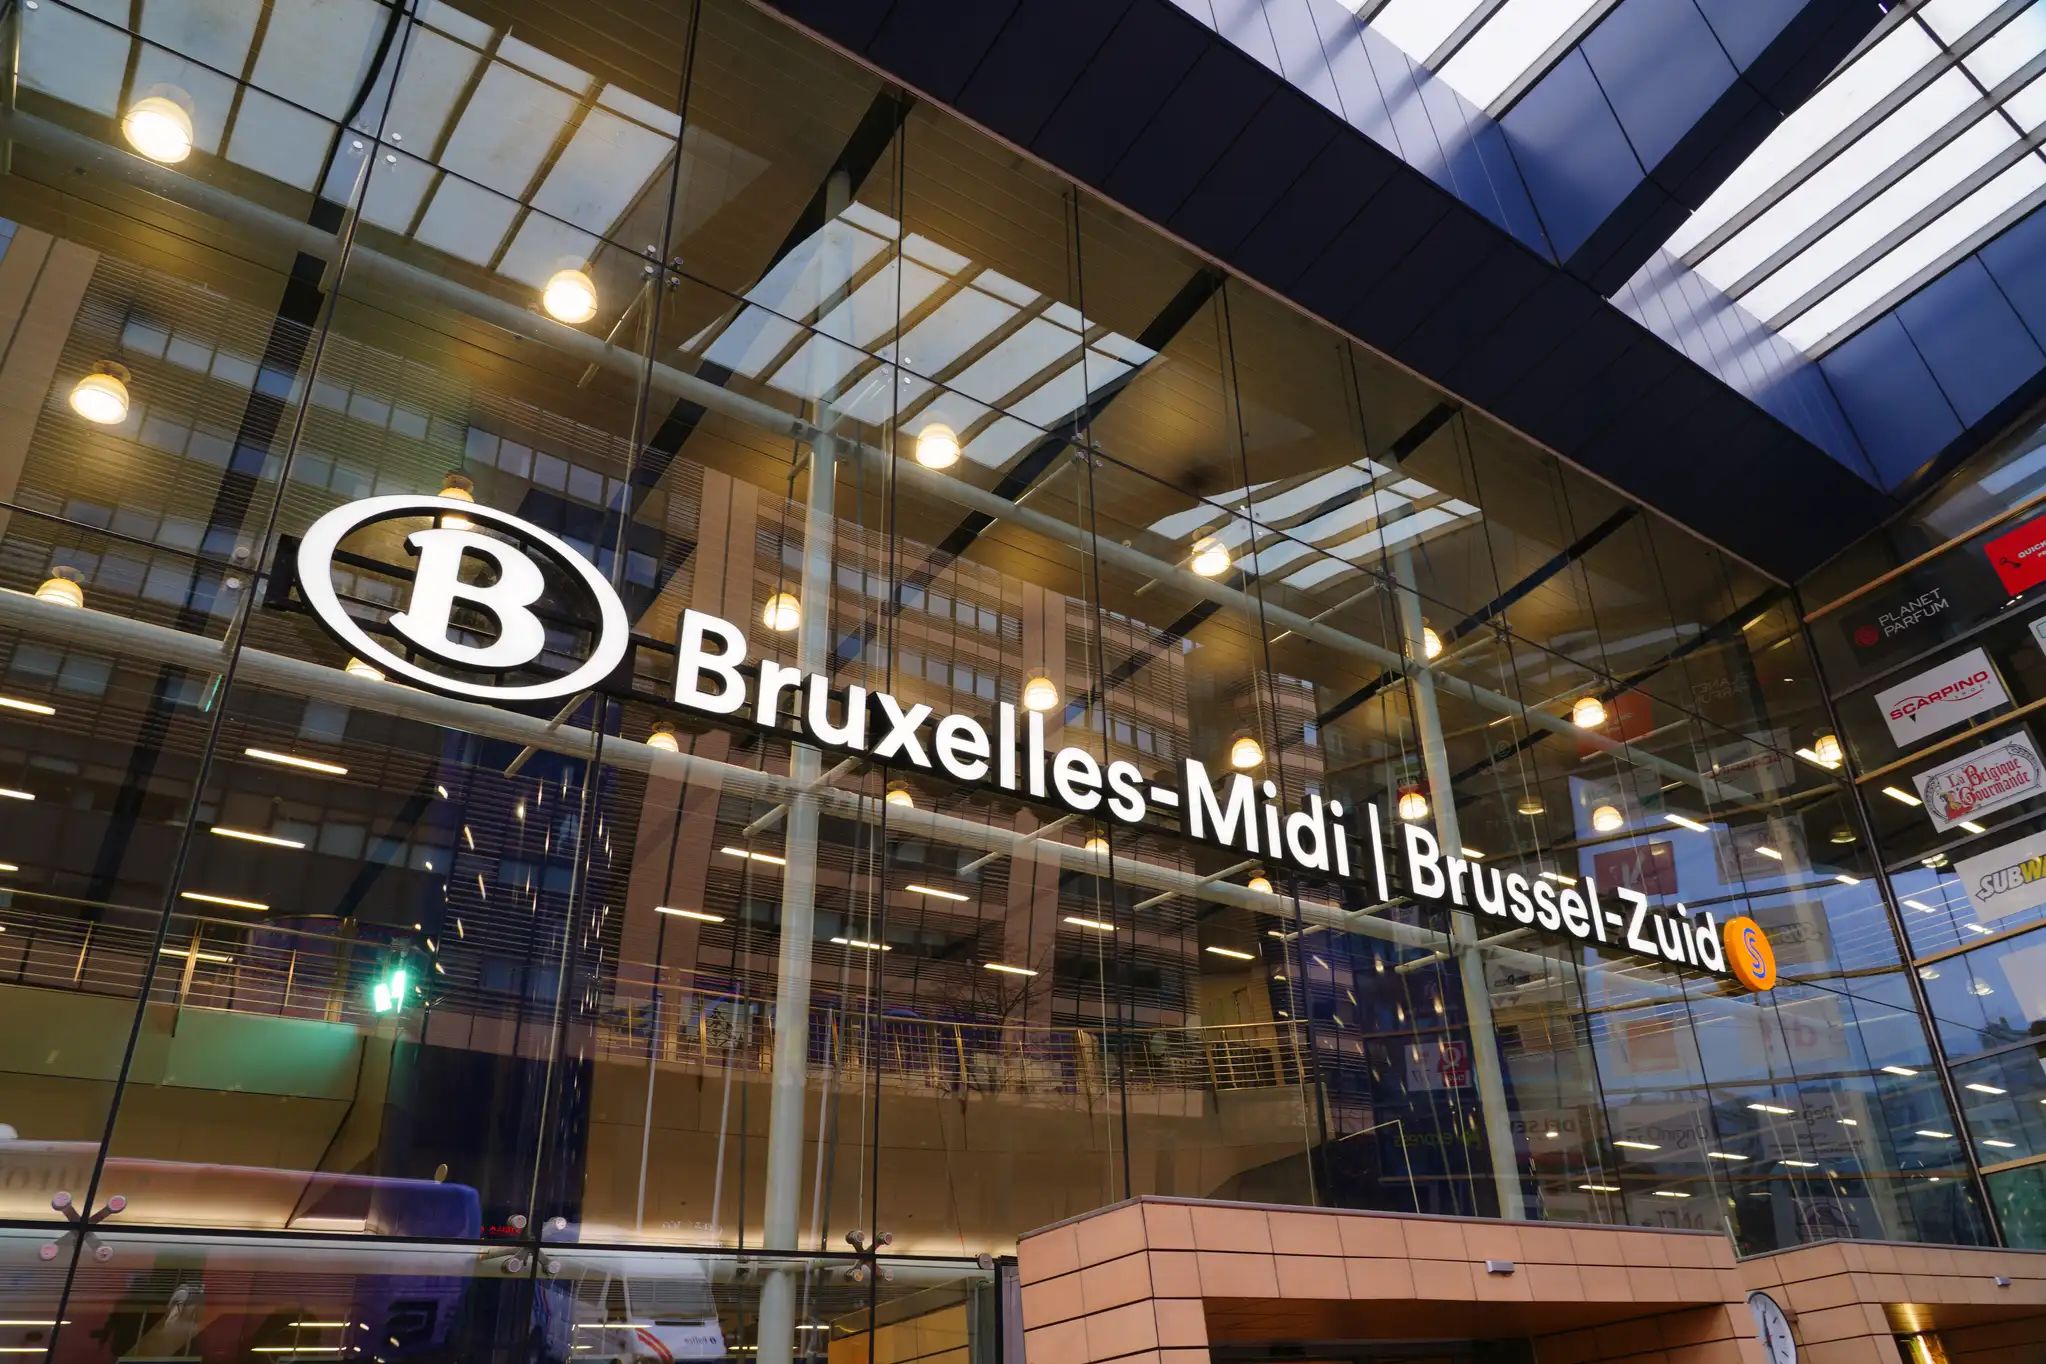 Brussels Train Station (Bruxelles-Midi) 